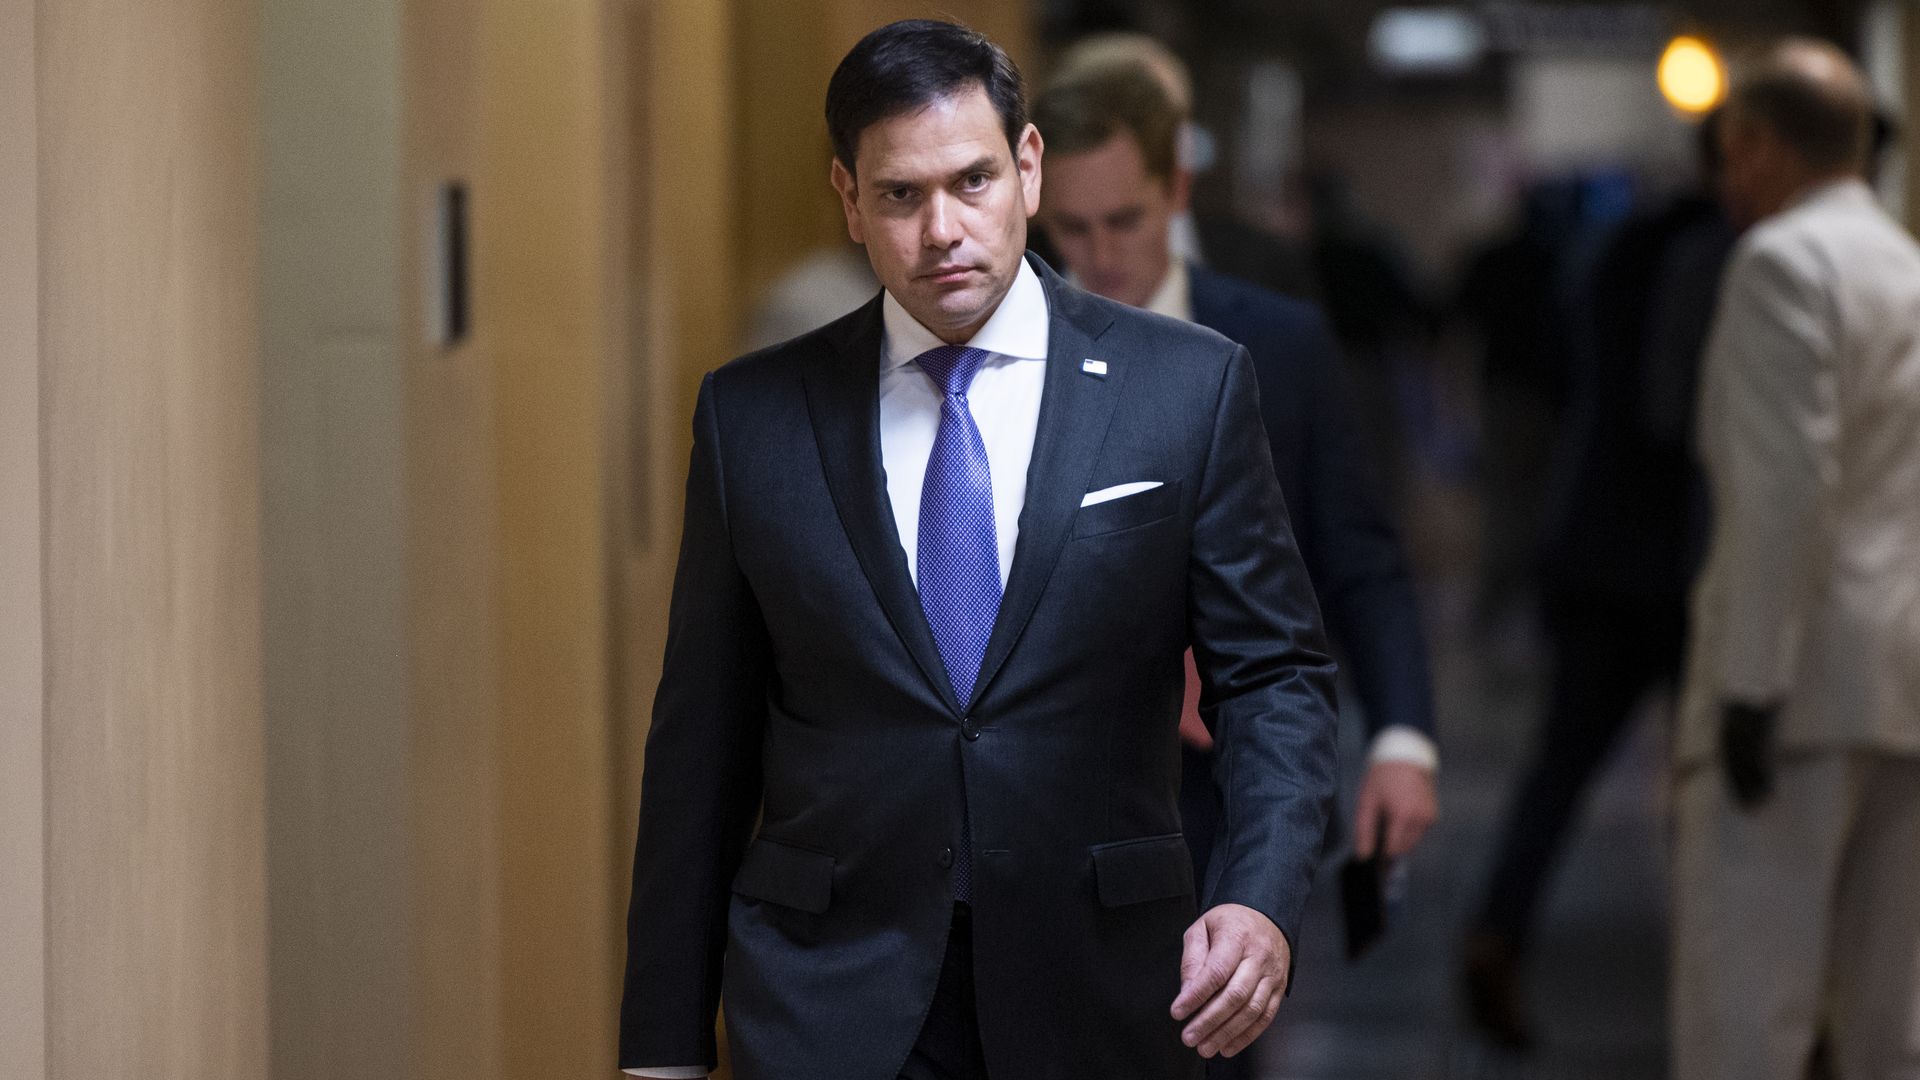 Sen. Marco Rubio is seen walking down a hallway in the U.S. Capitol.